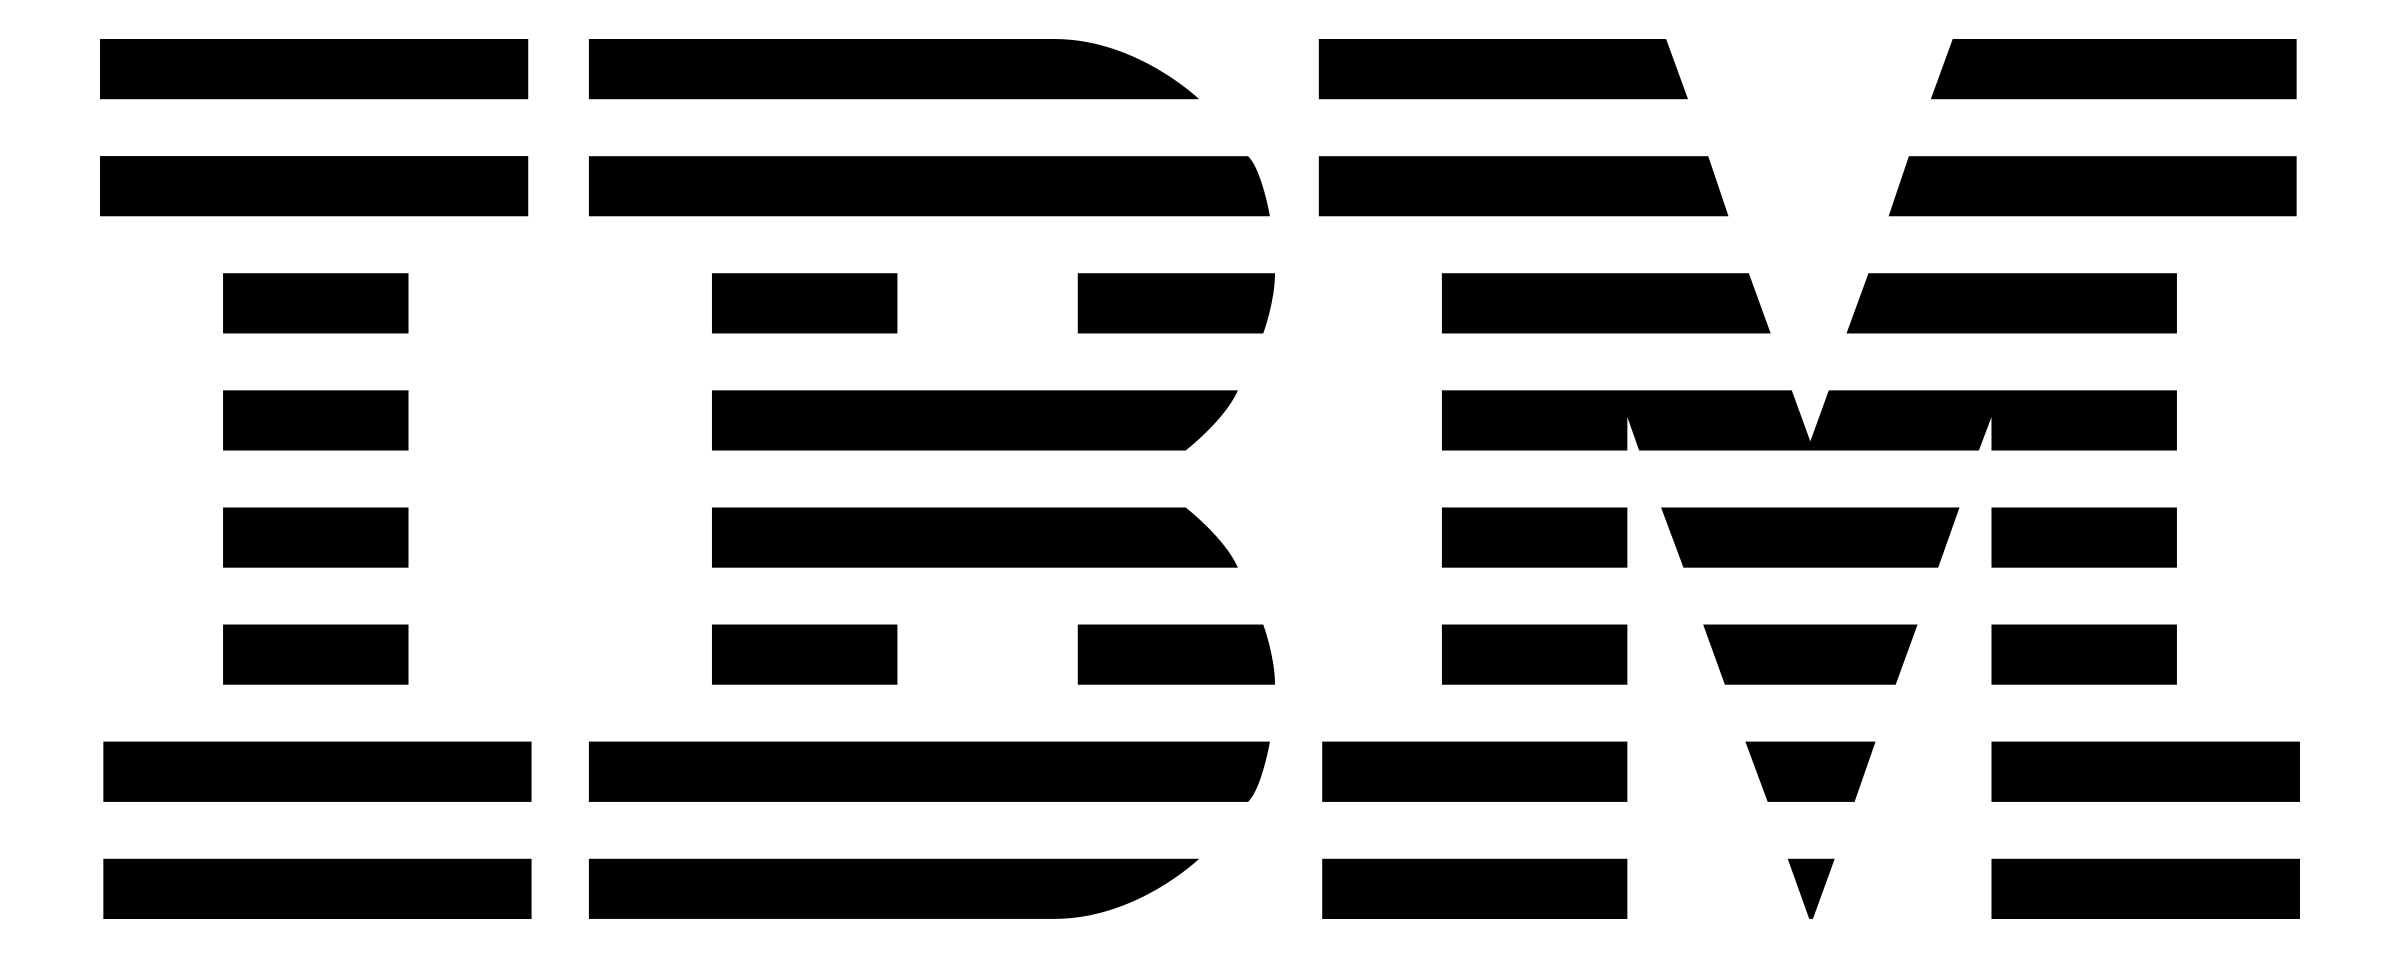 ibm-logo-black-transparent.png